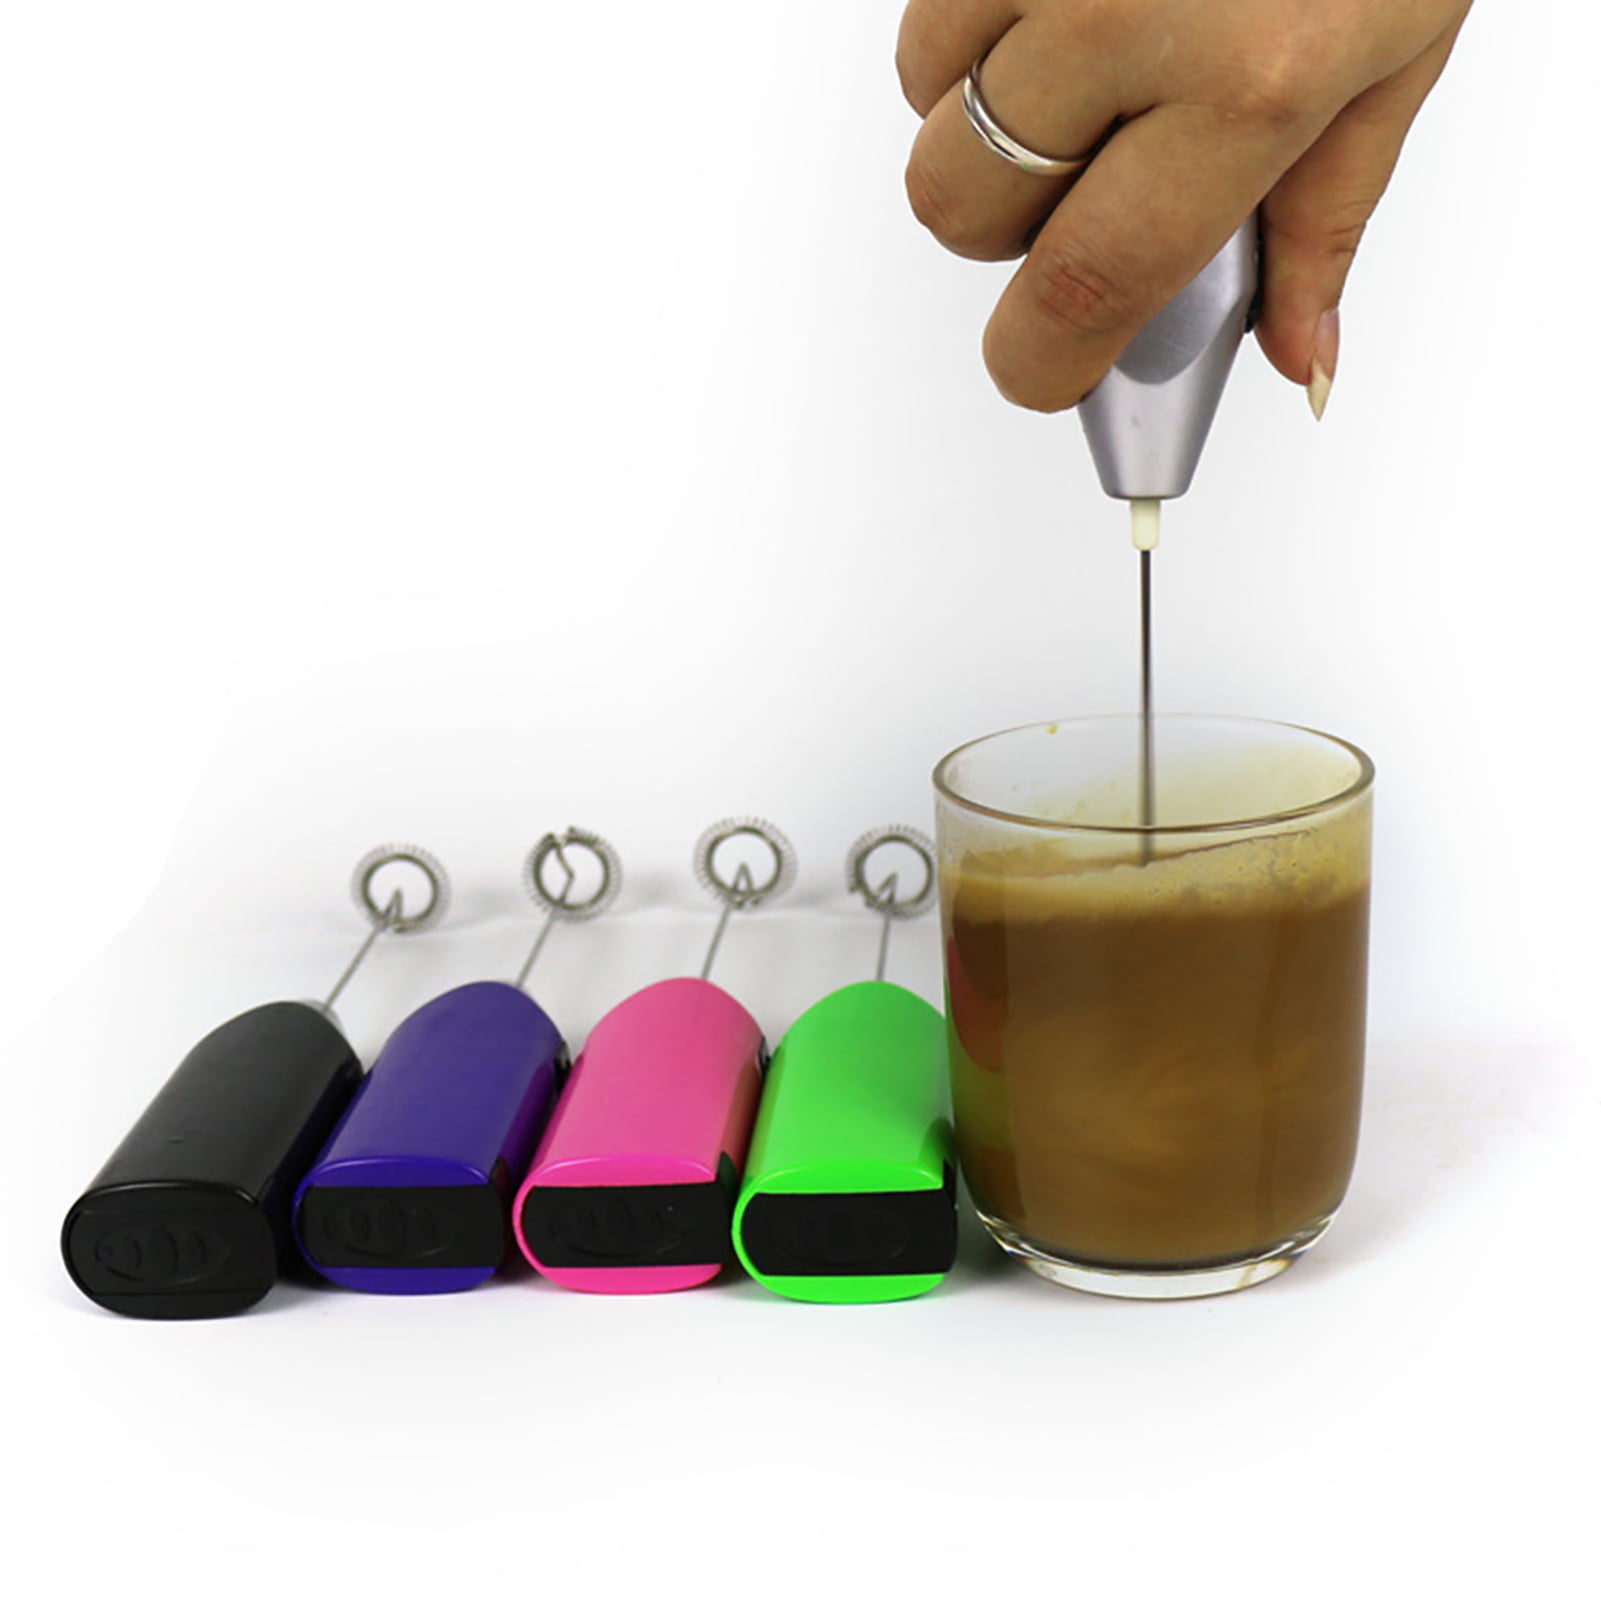 CAFEDE KONA - Electric Milk Frother Handheld Electric Spring